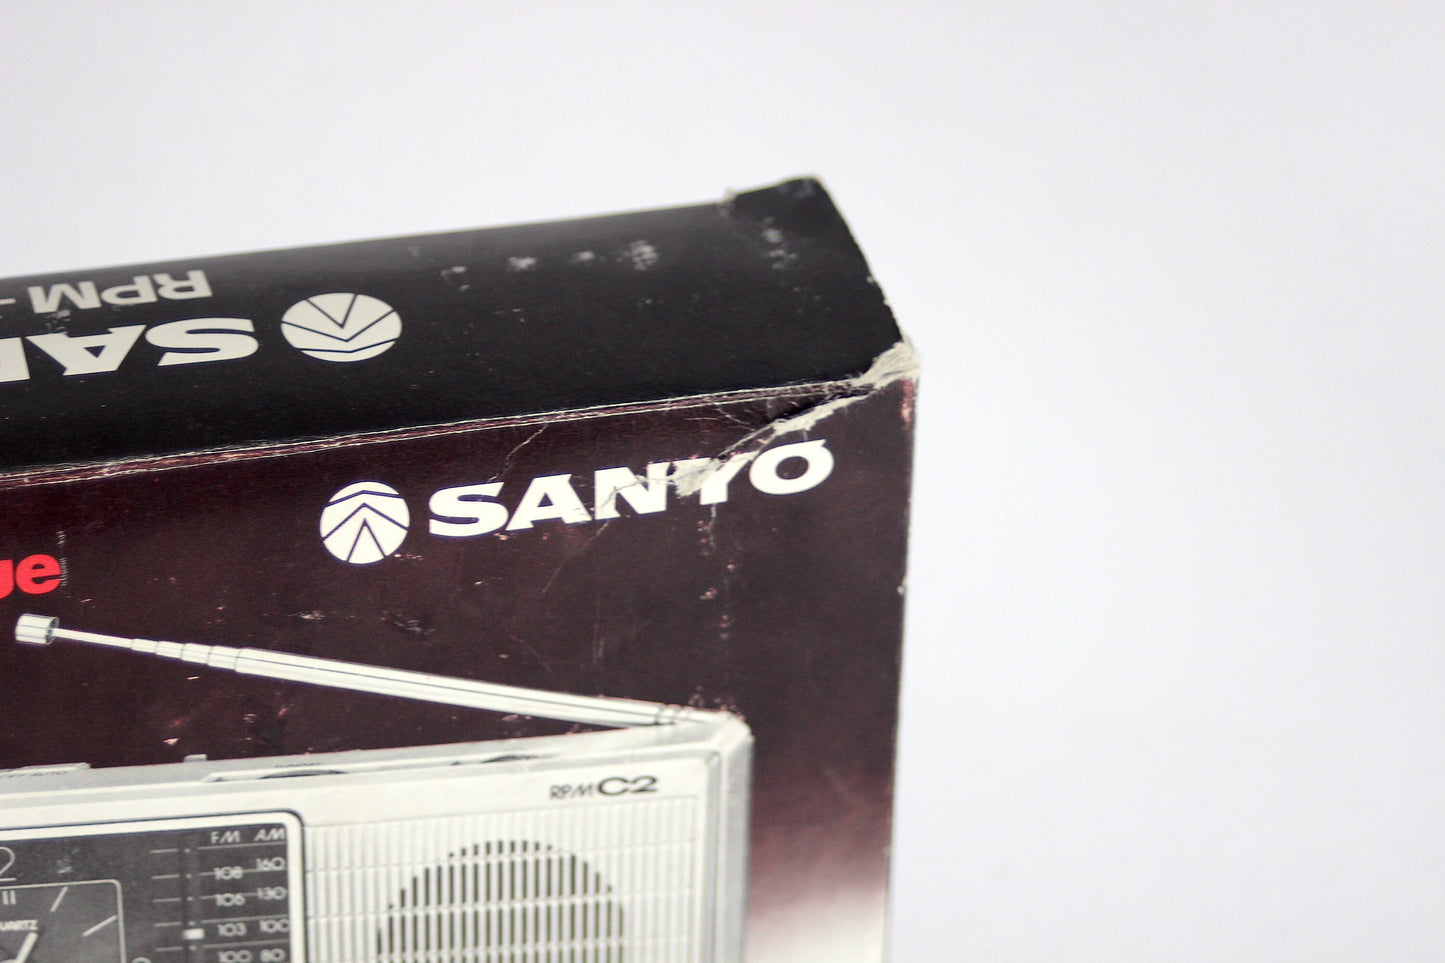 SANYO am/fm radio with alarm clock mod. RPM-C2. Japan 1985